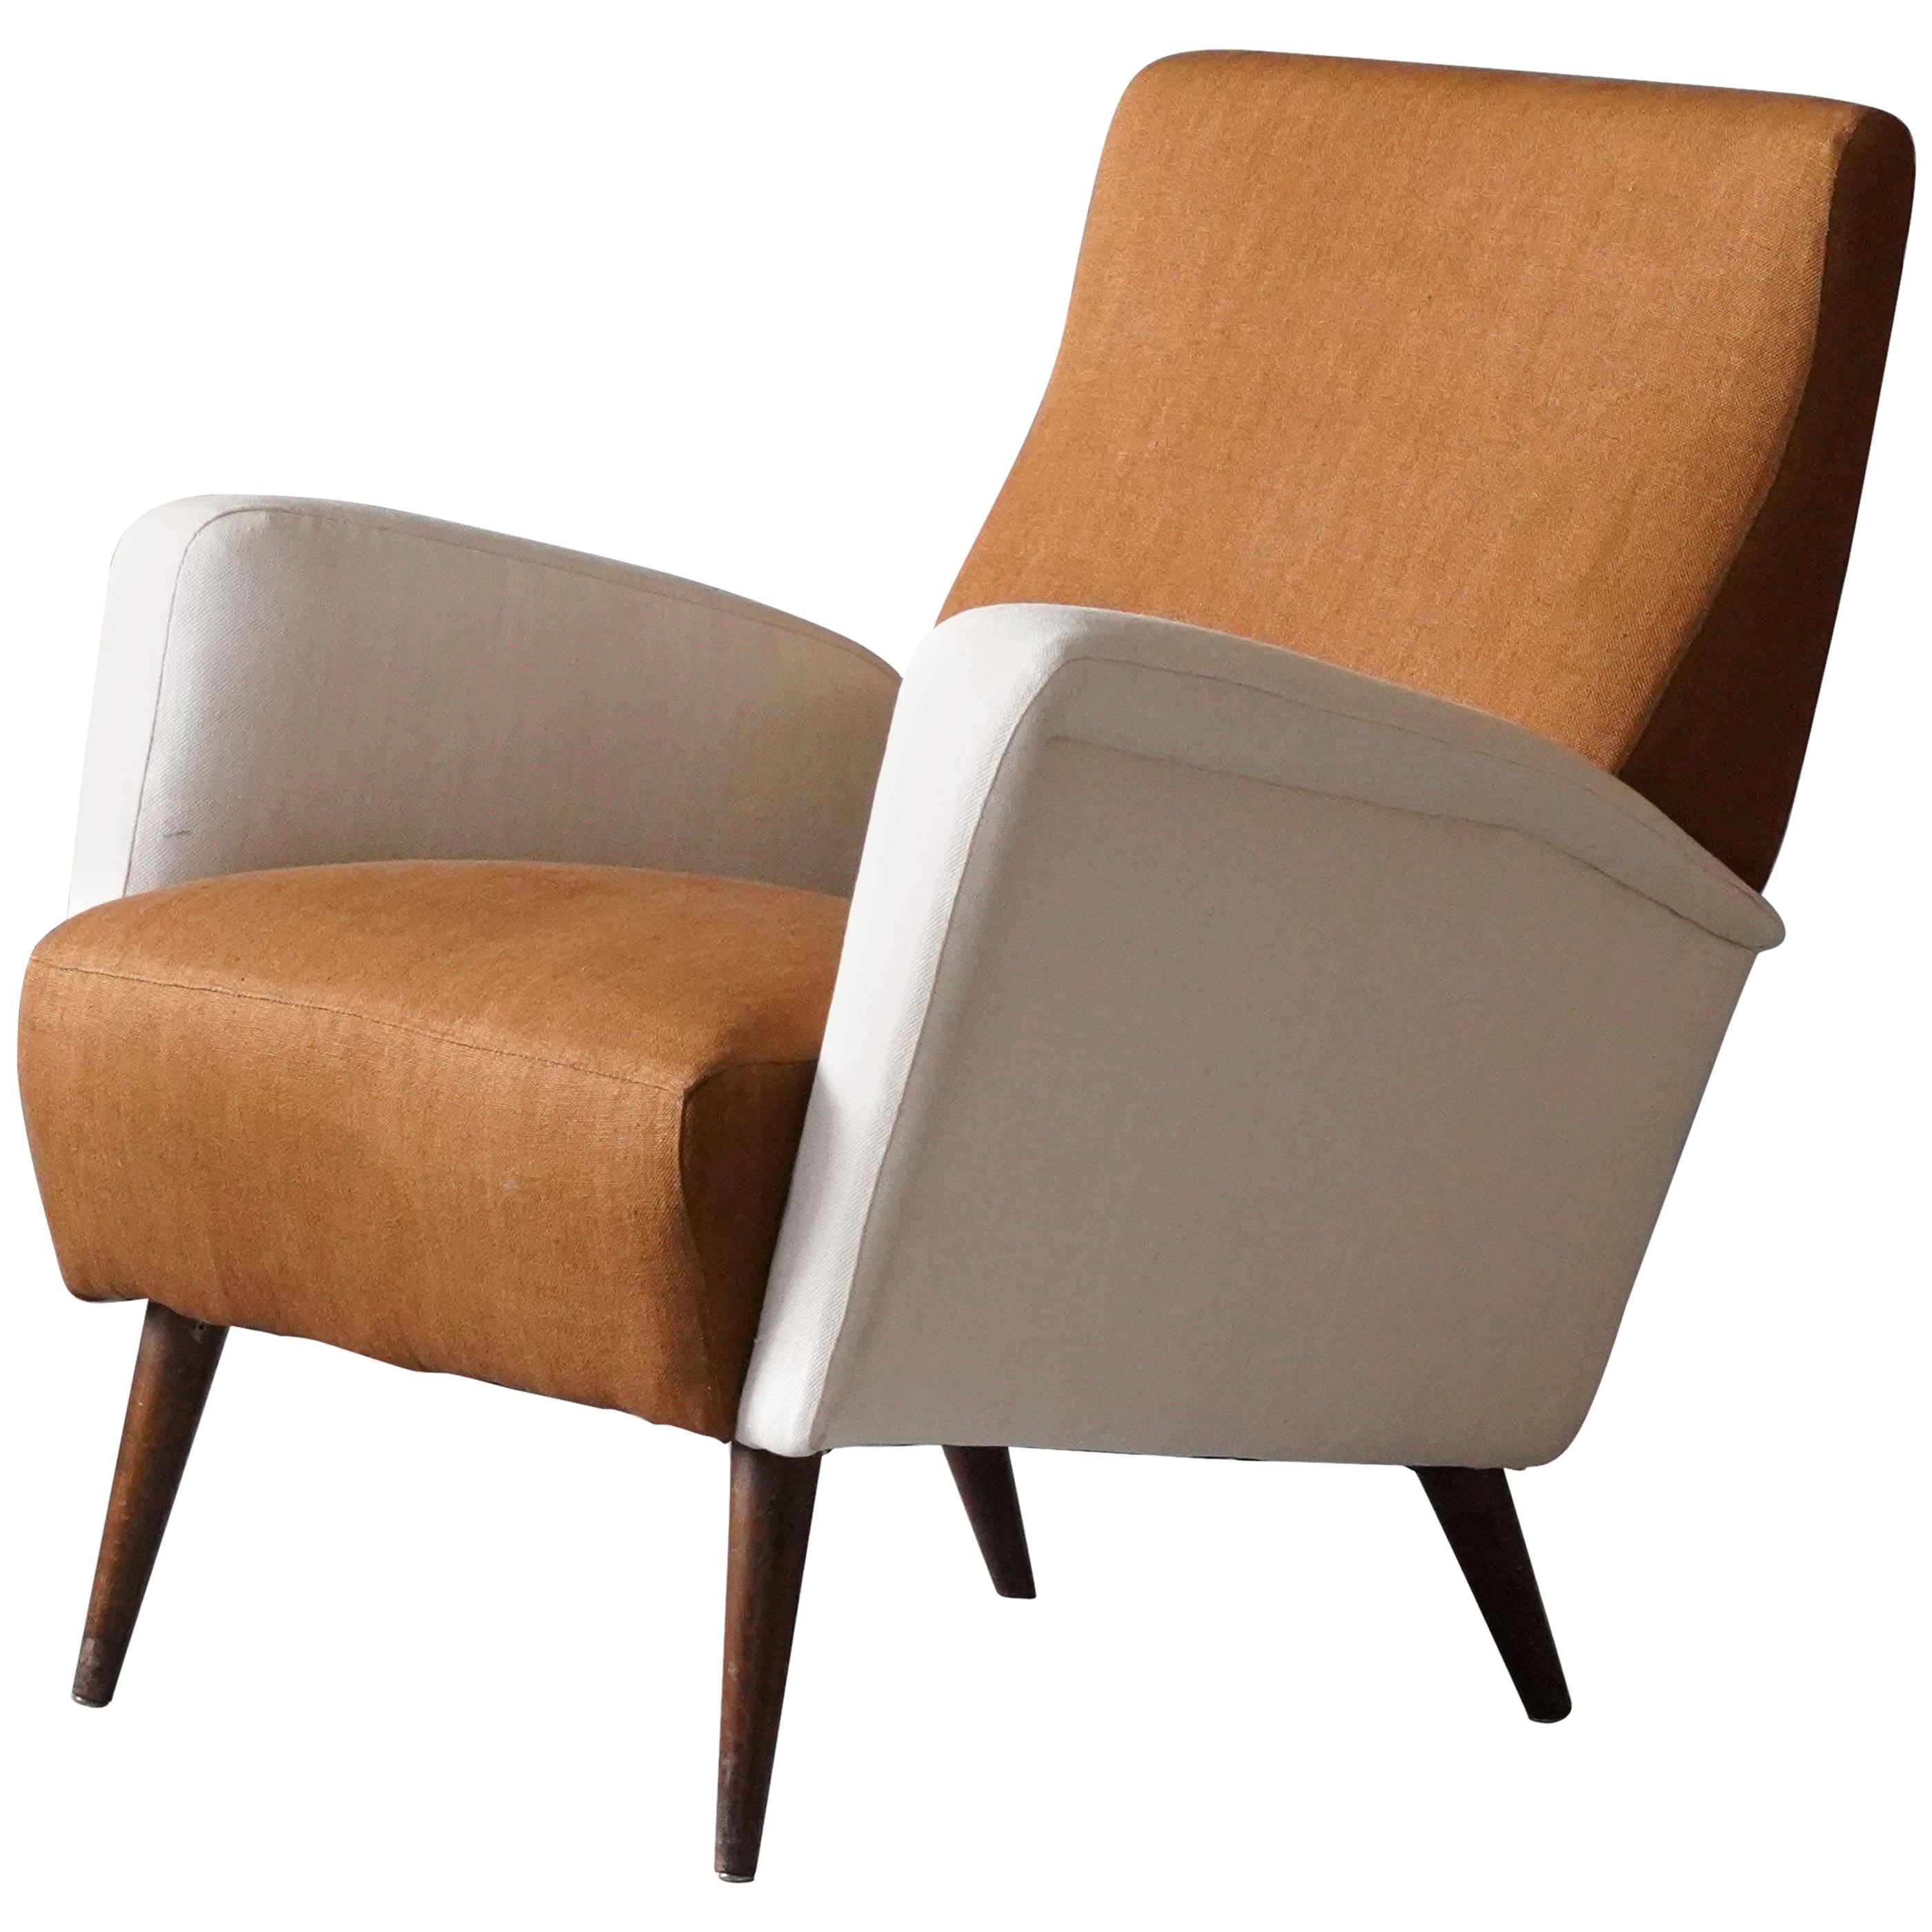 Studio Tecnico Cassina, Lounge Chair, Walnut, Fabric, Italy, 1950s